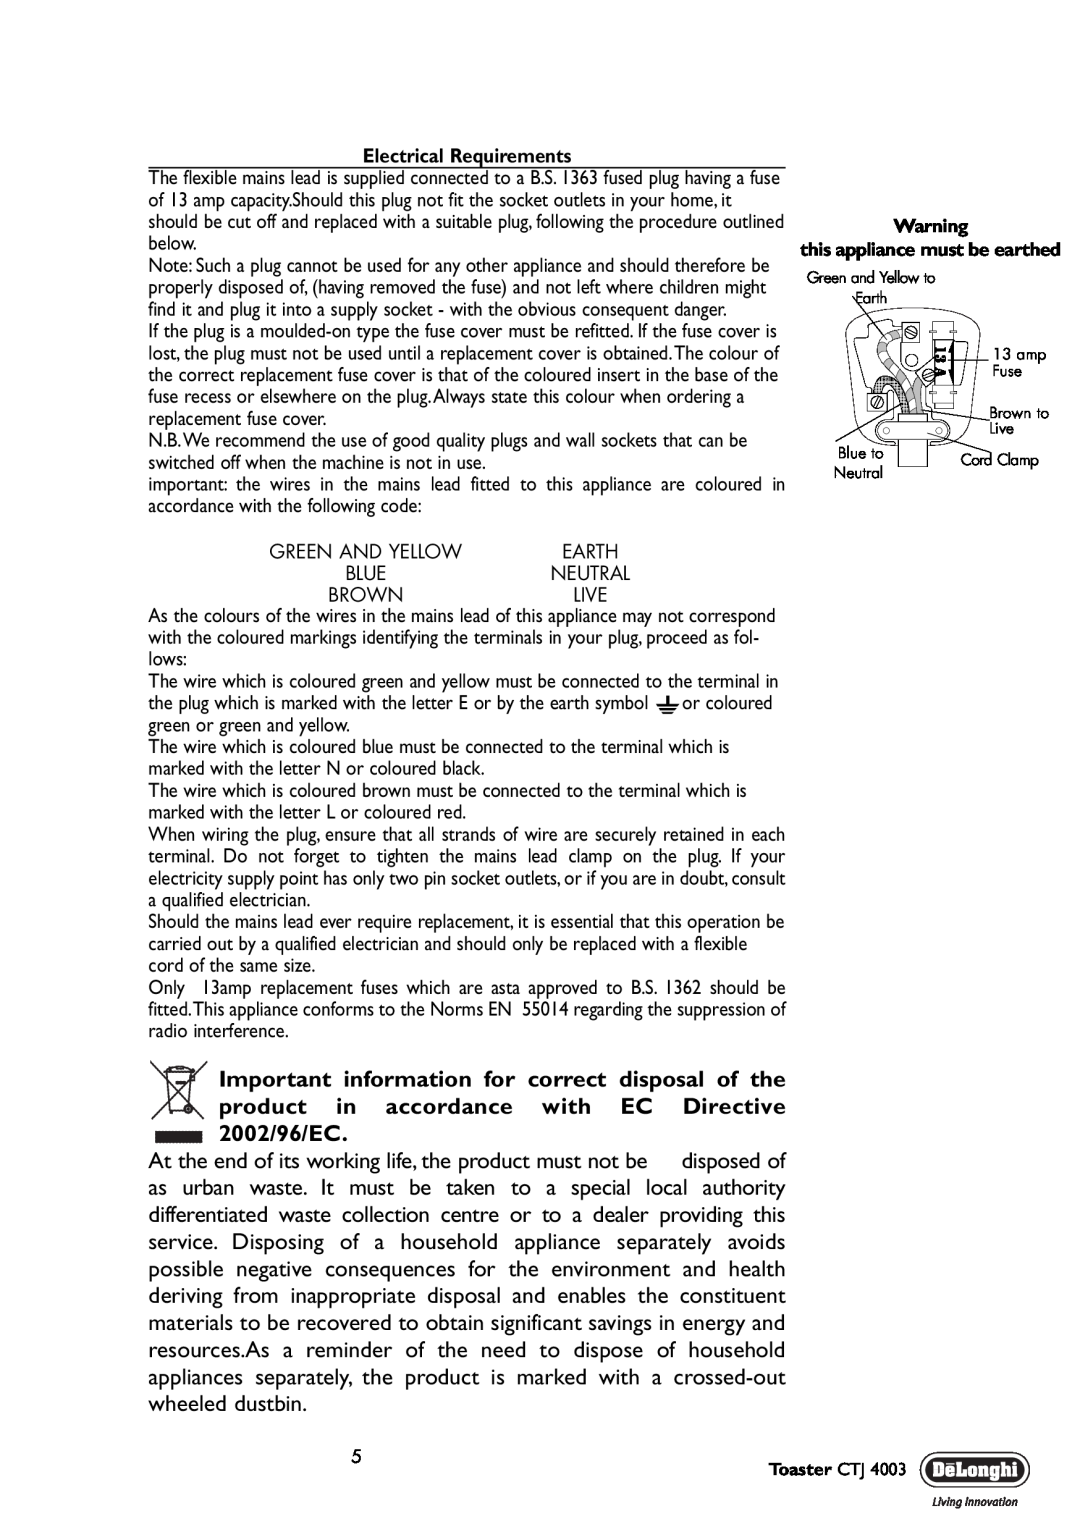 DeLonghi CTJ 4003 manual Electrical Requirements, Brown 